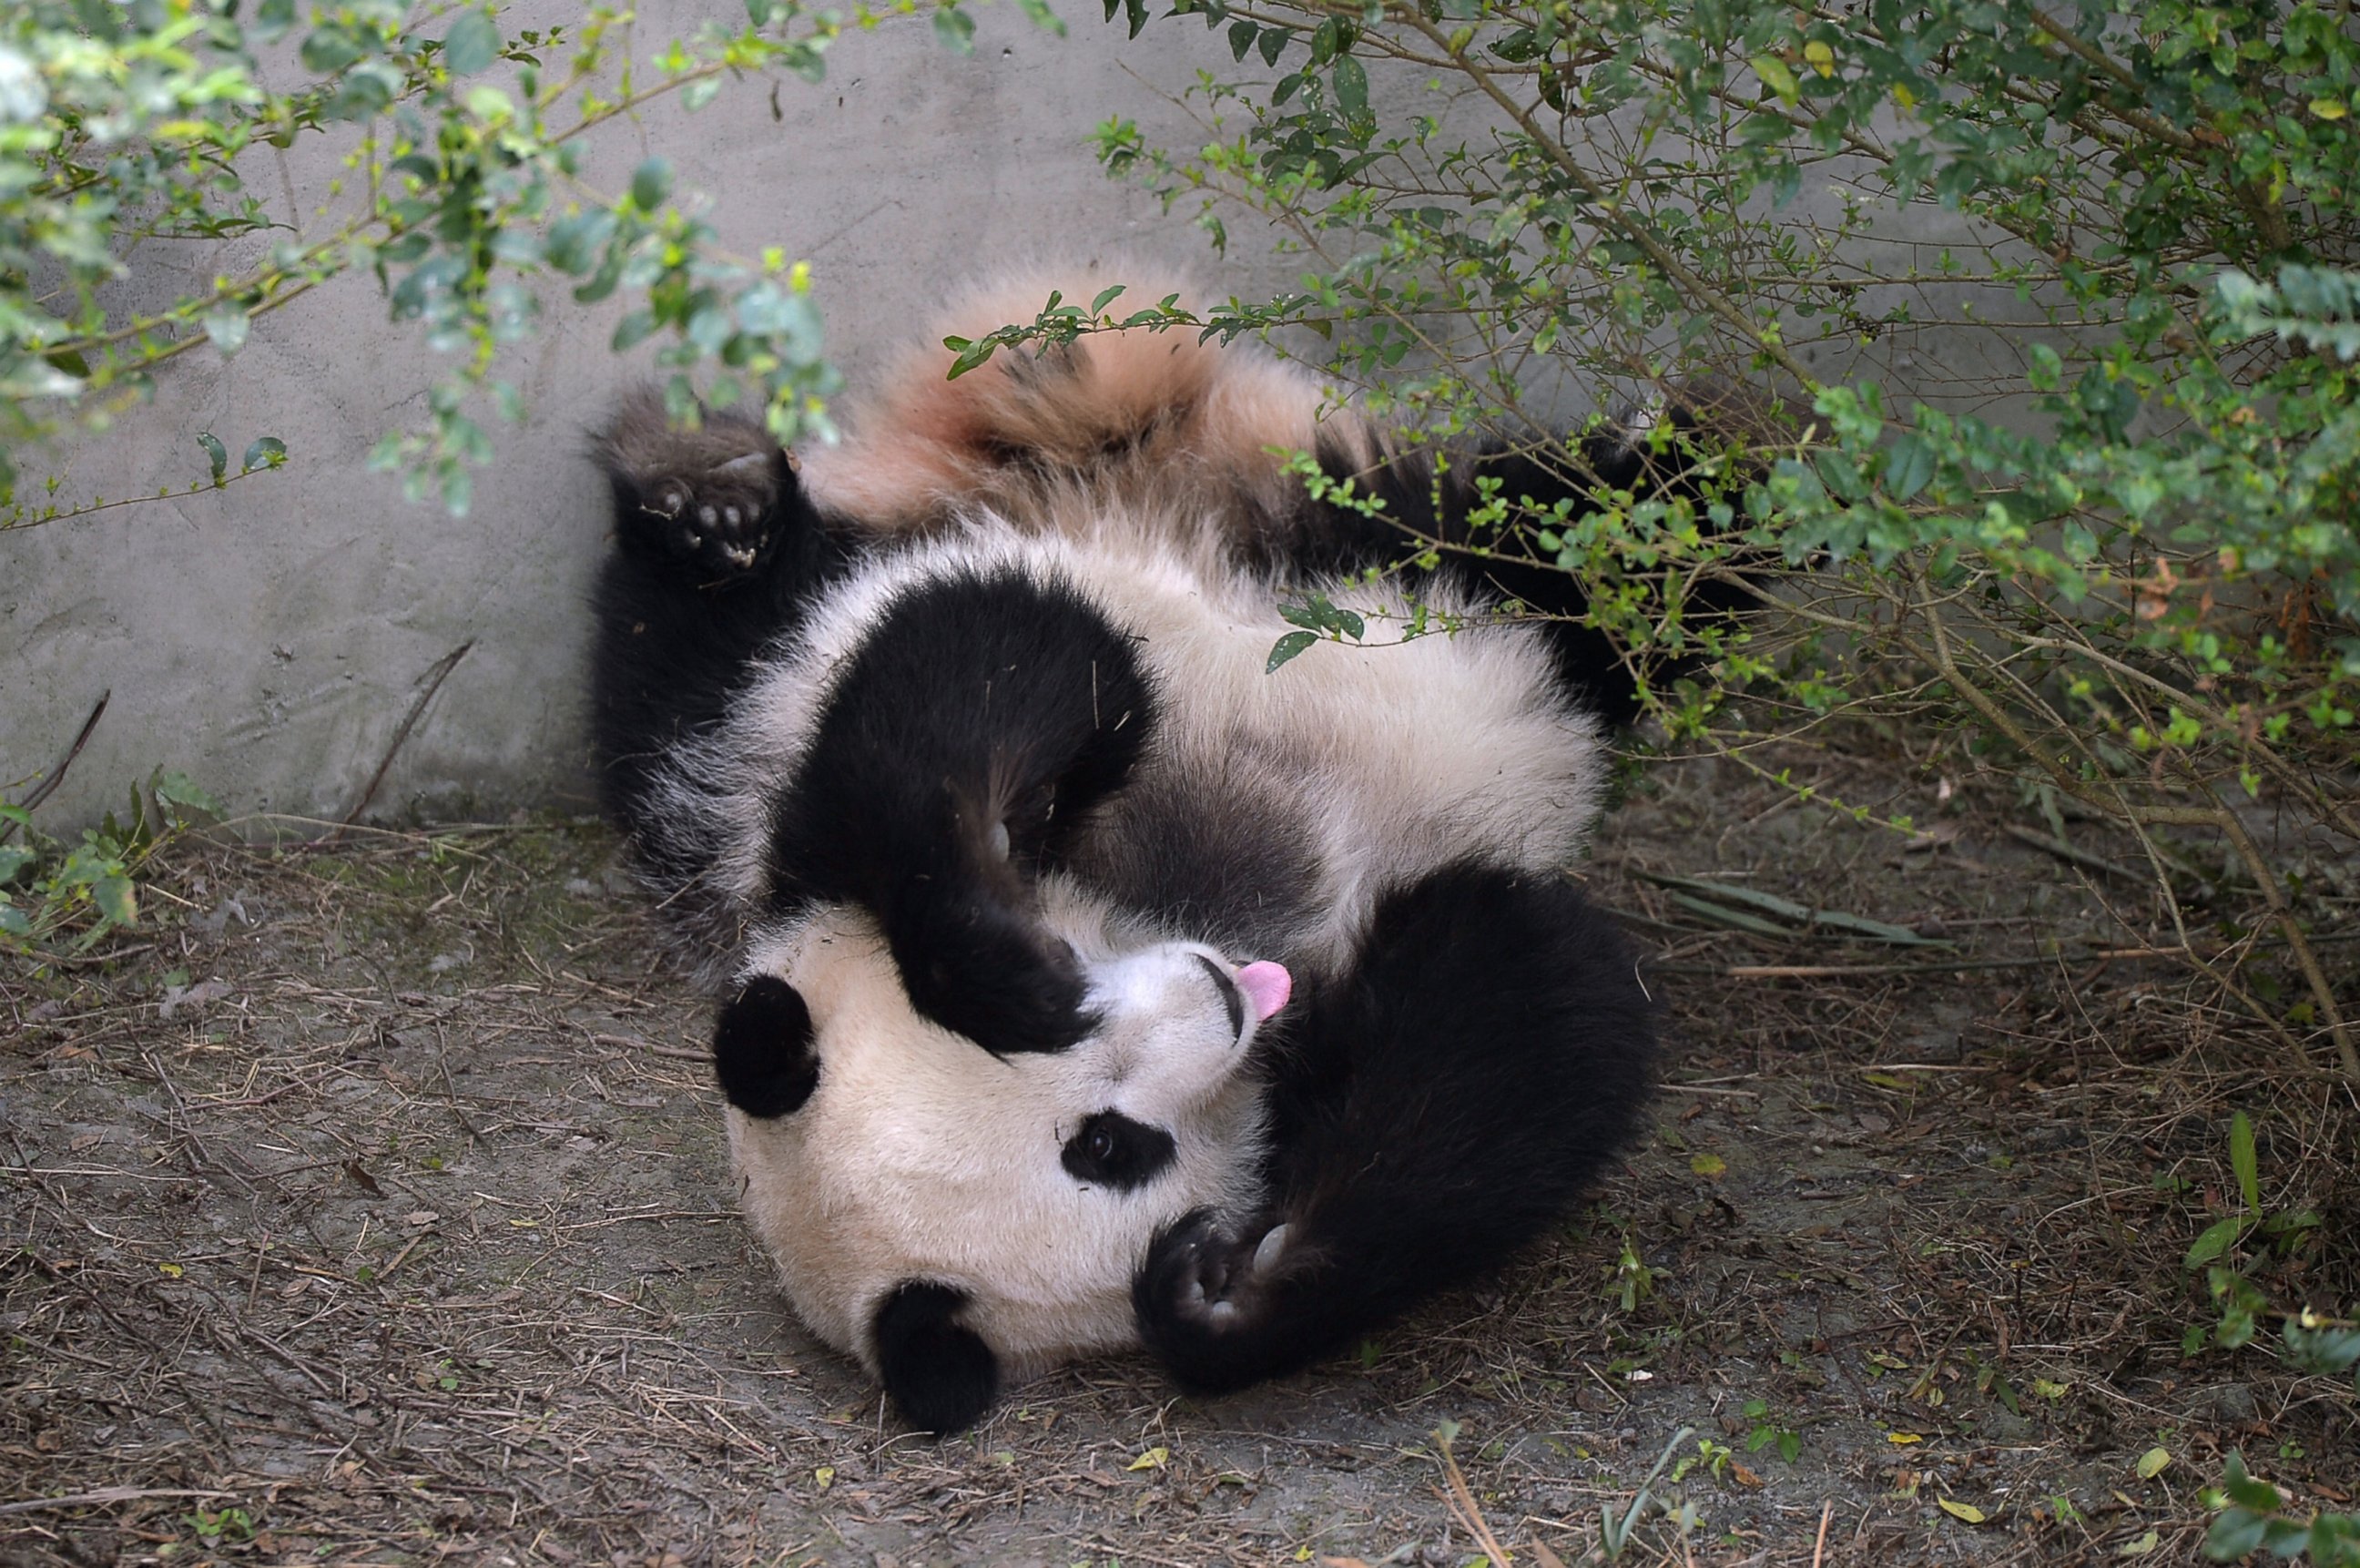 PHOTO: Giant panda Mei Huan lies on the ground at Chengdu Research Base of Giant Panda Breeding on Nov. 16, 2016 in Chengdu, Sichuan Province of China.